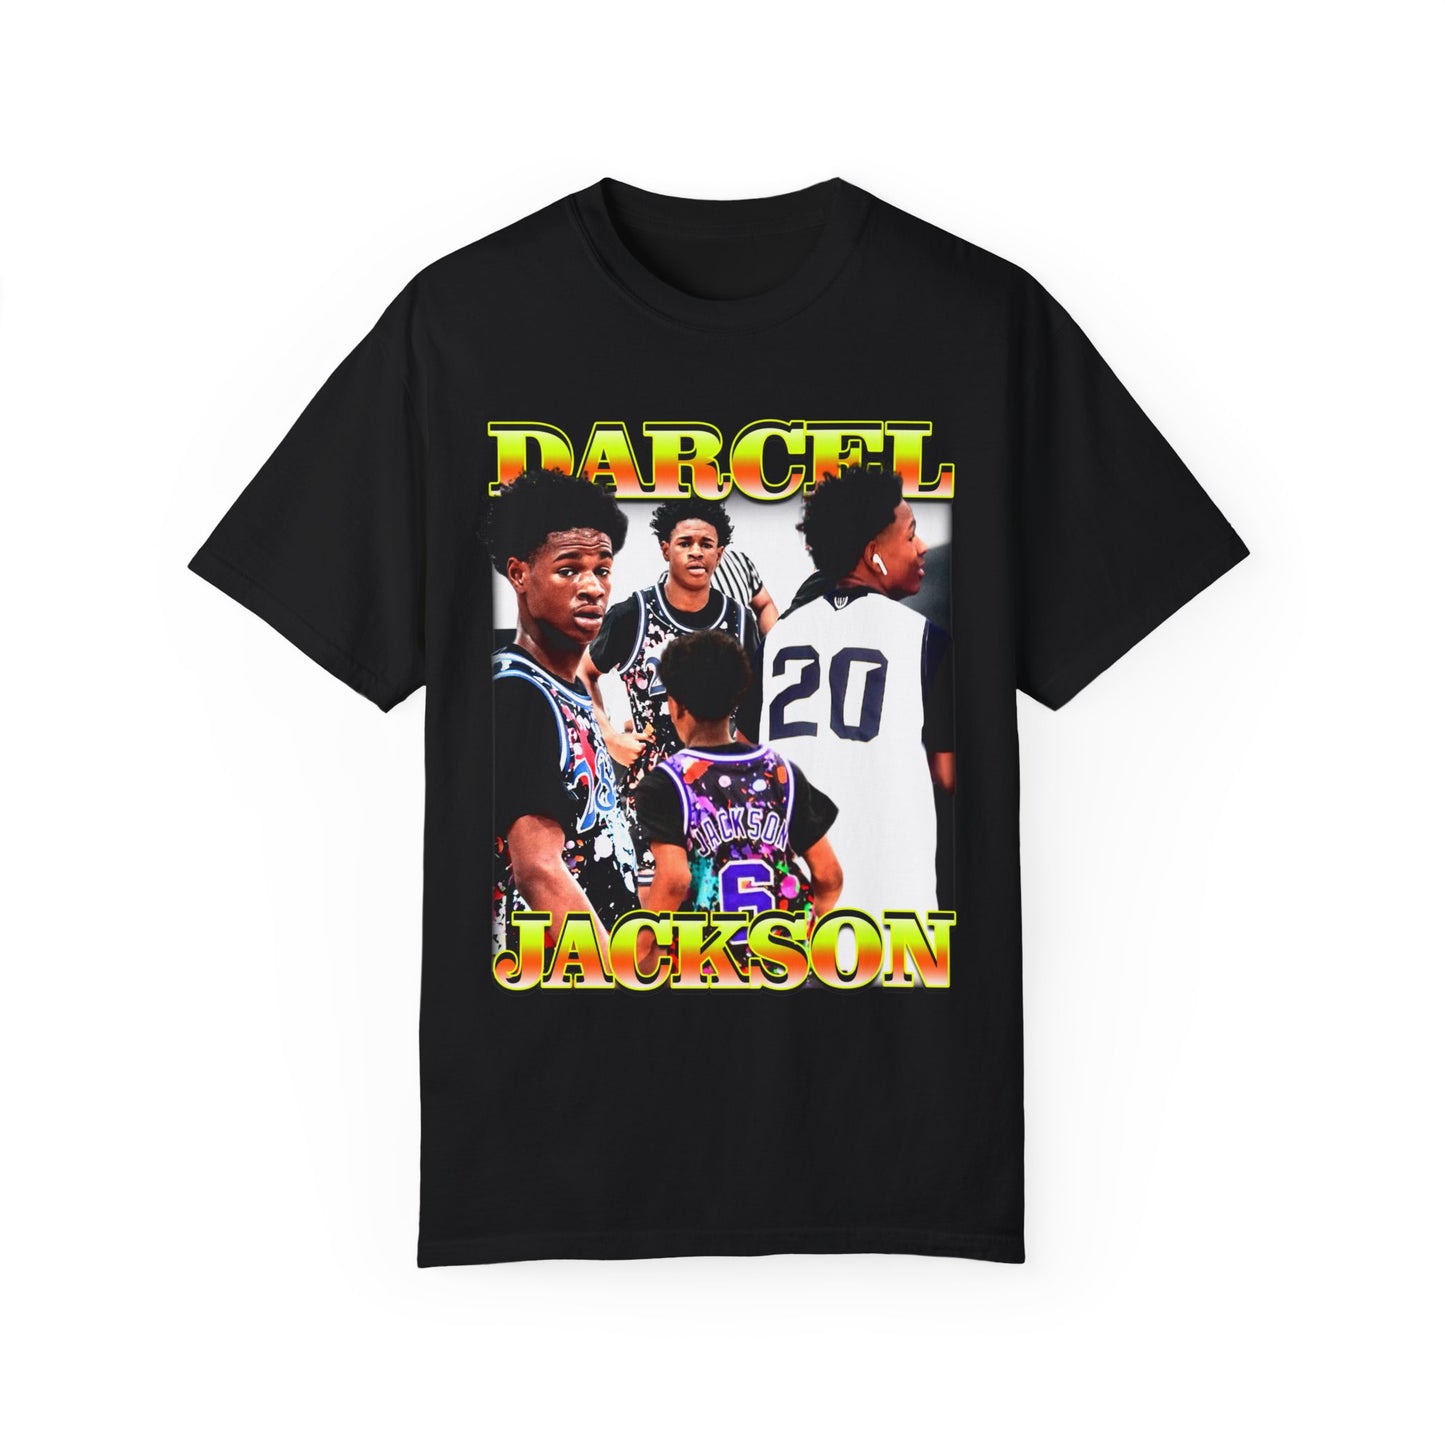 Darcel Jackson Graphic T-shirt